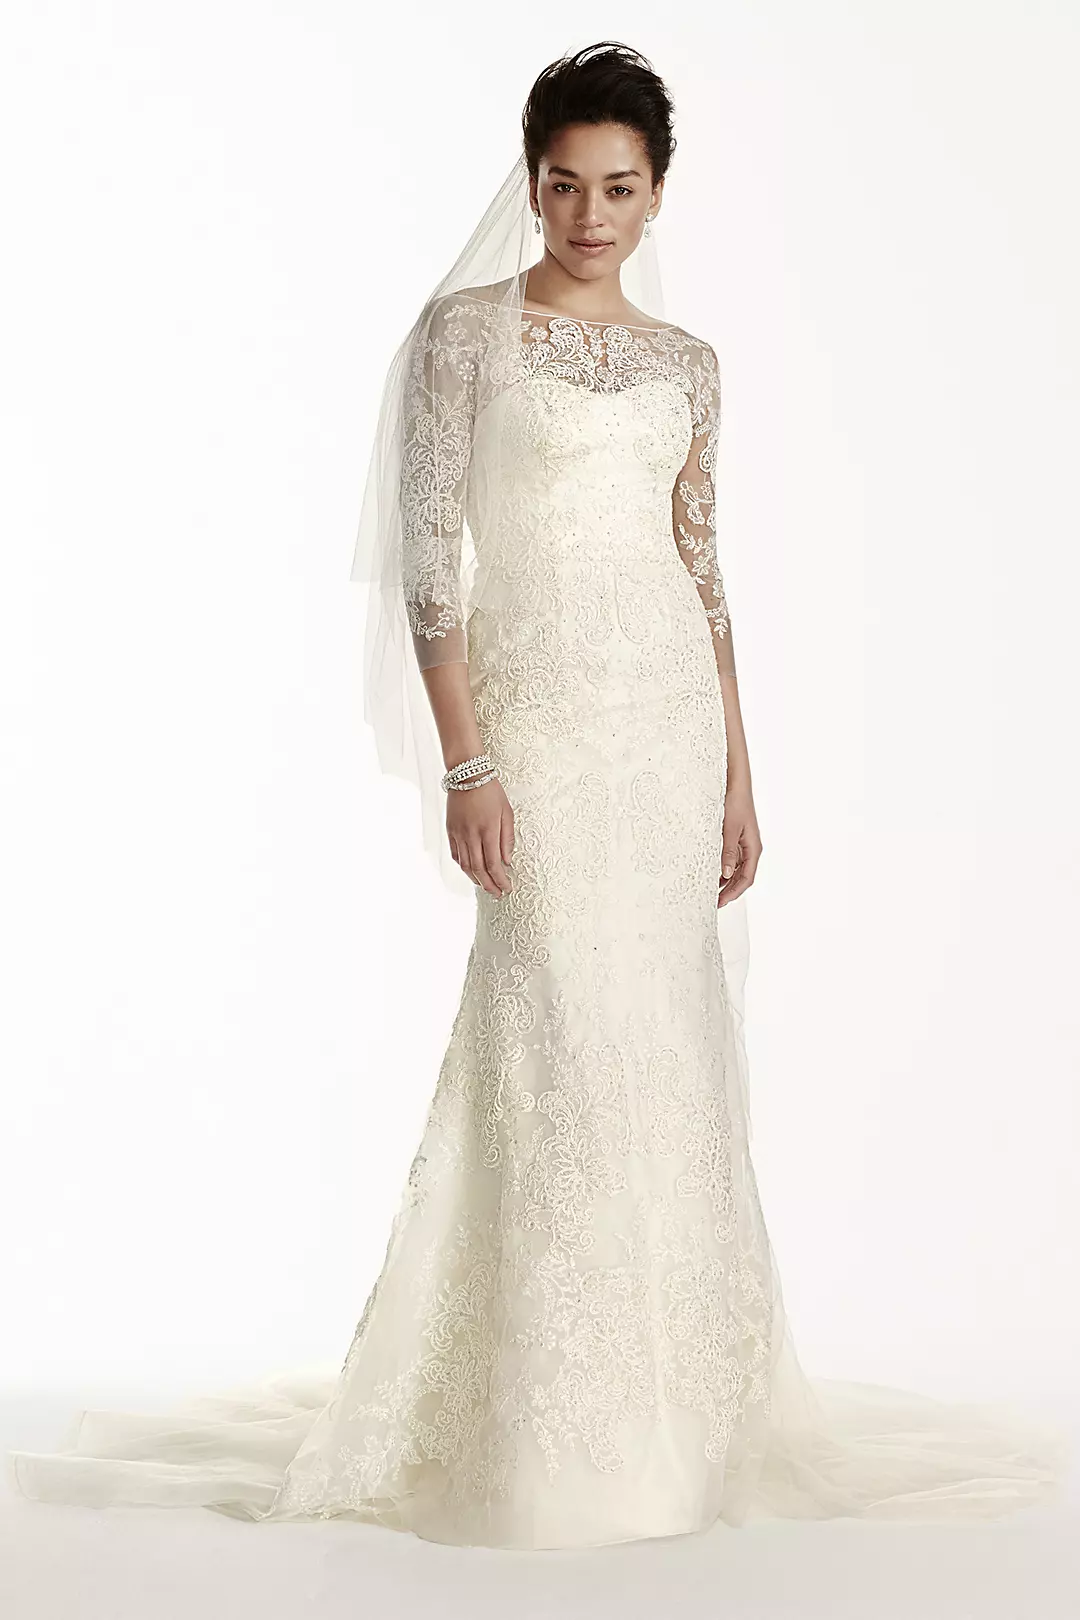 Oleg Cassini Tulle Wedding Dress with 3/4 Sleeves Image